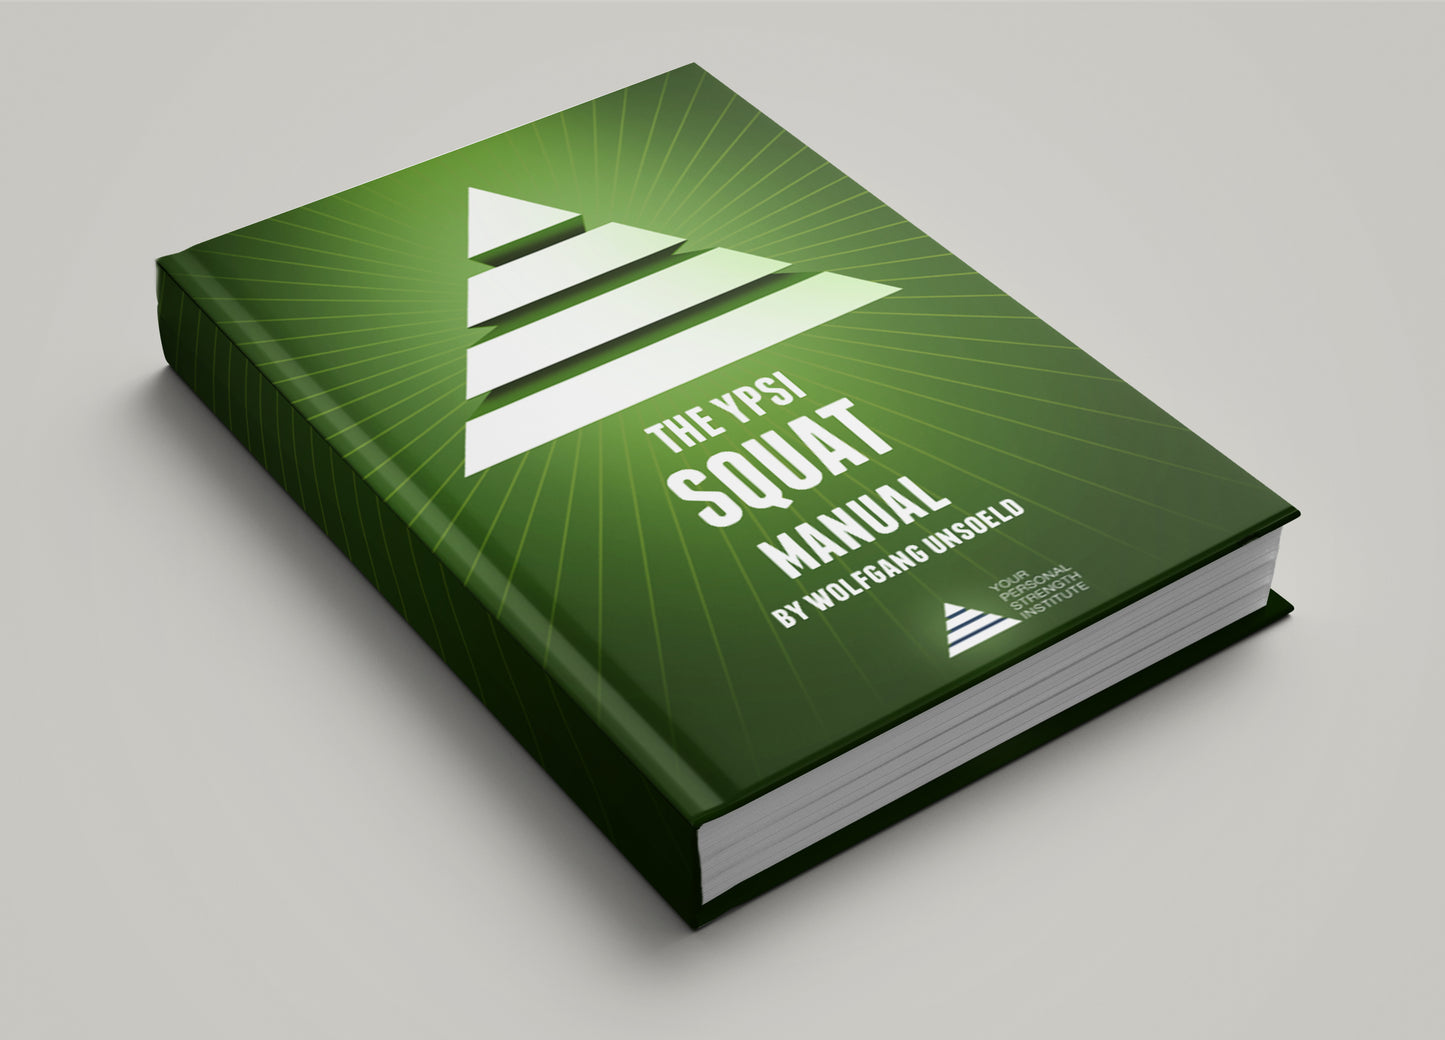 eBook & Videos - The YPSI Squat Manual